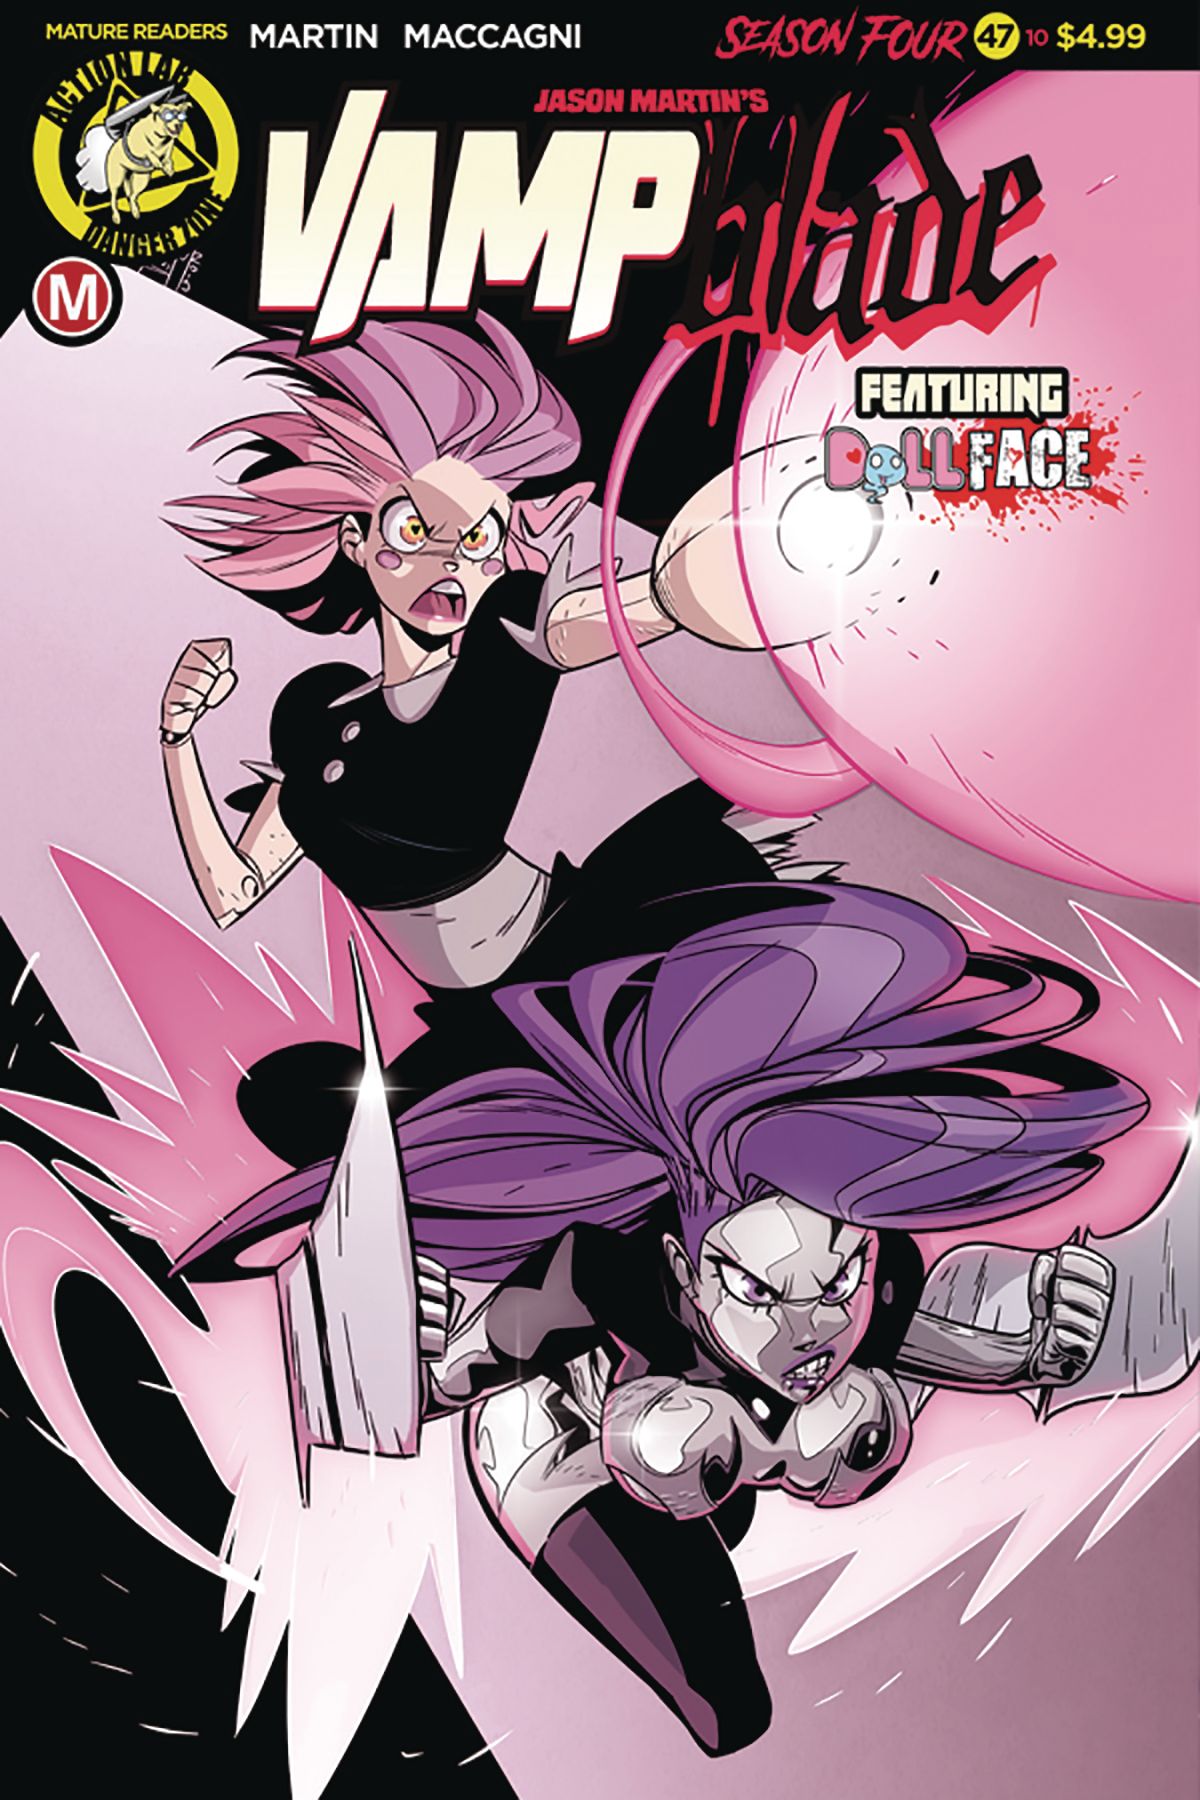 Vampblade: Season 4 #10 Comic